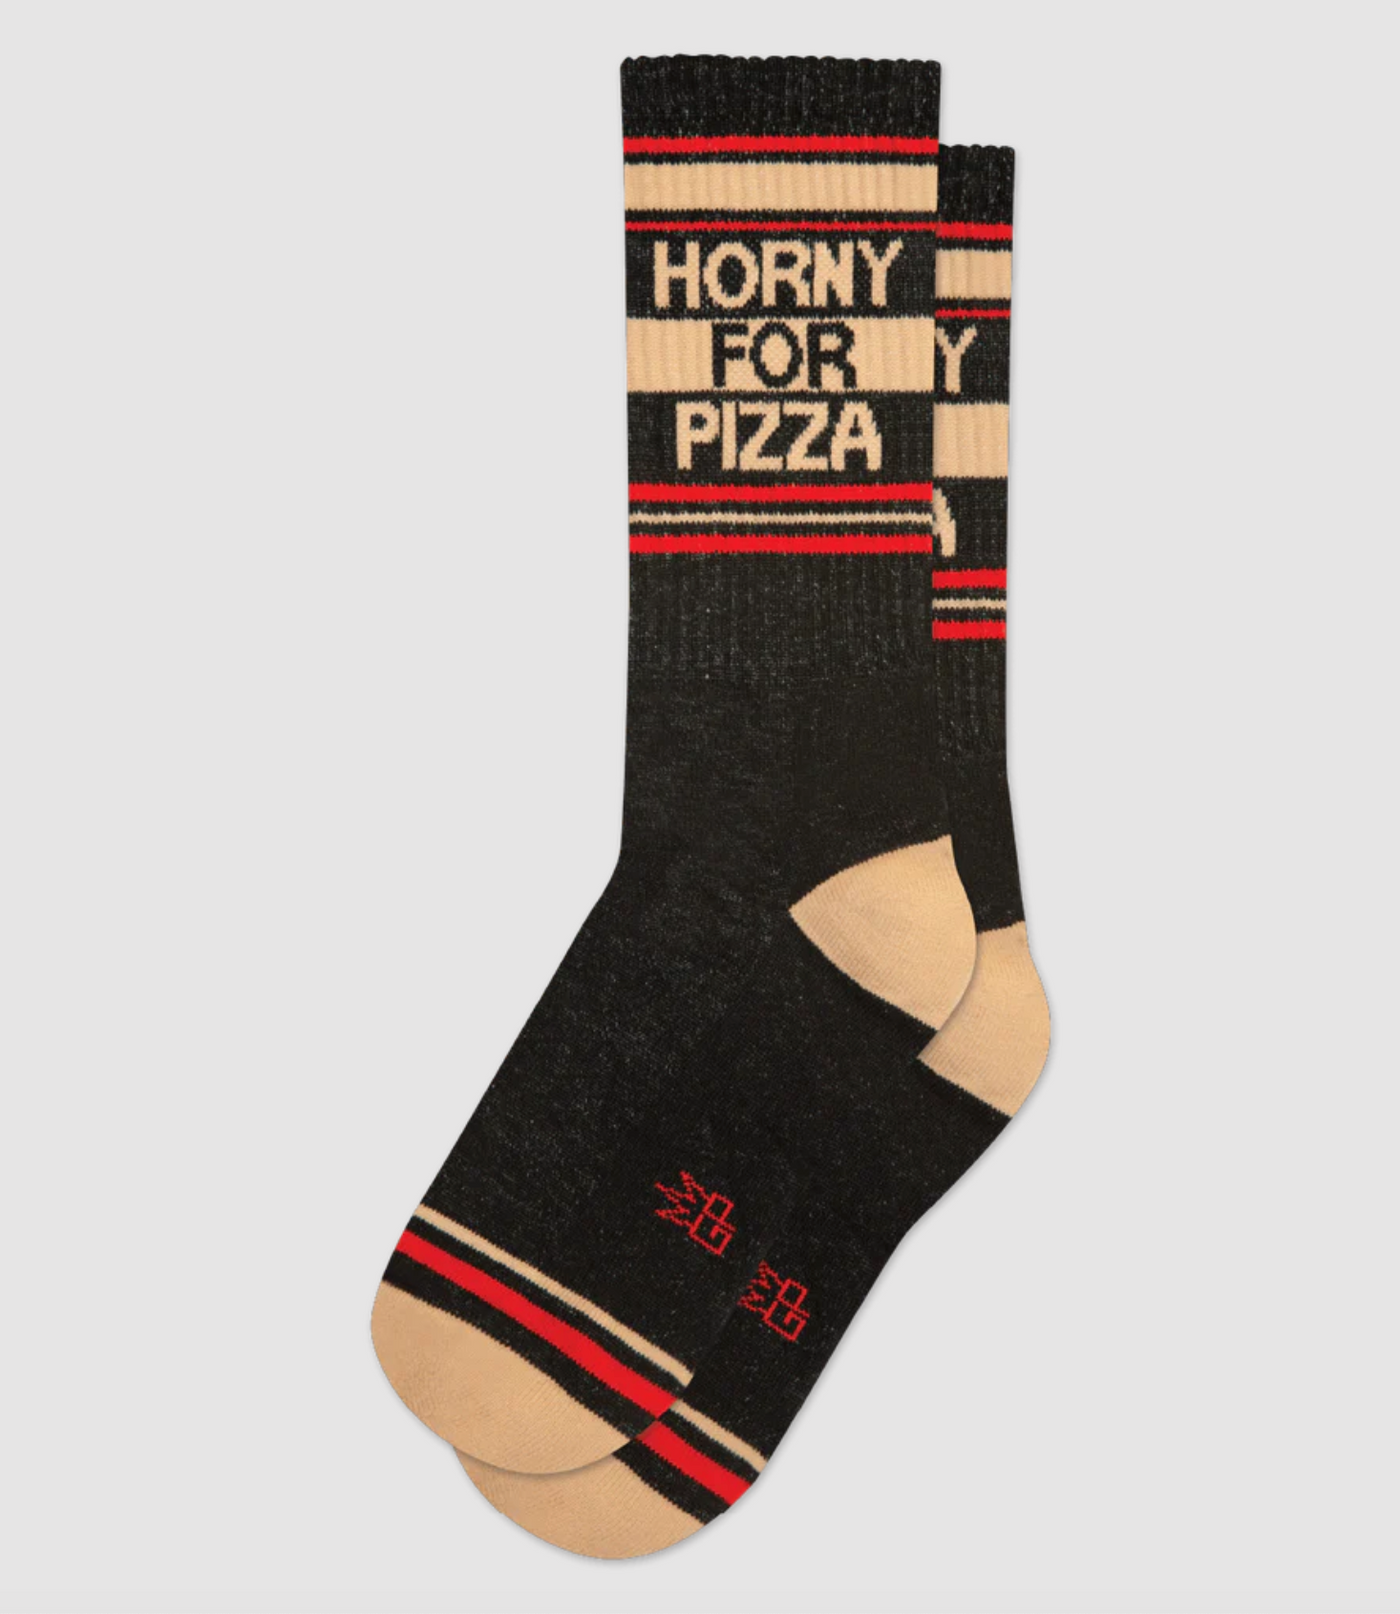 HORNY FOR PIZZA gym socks